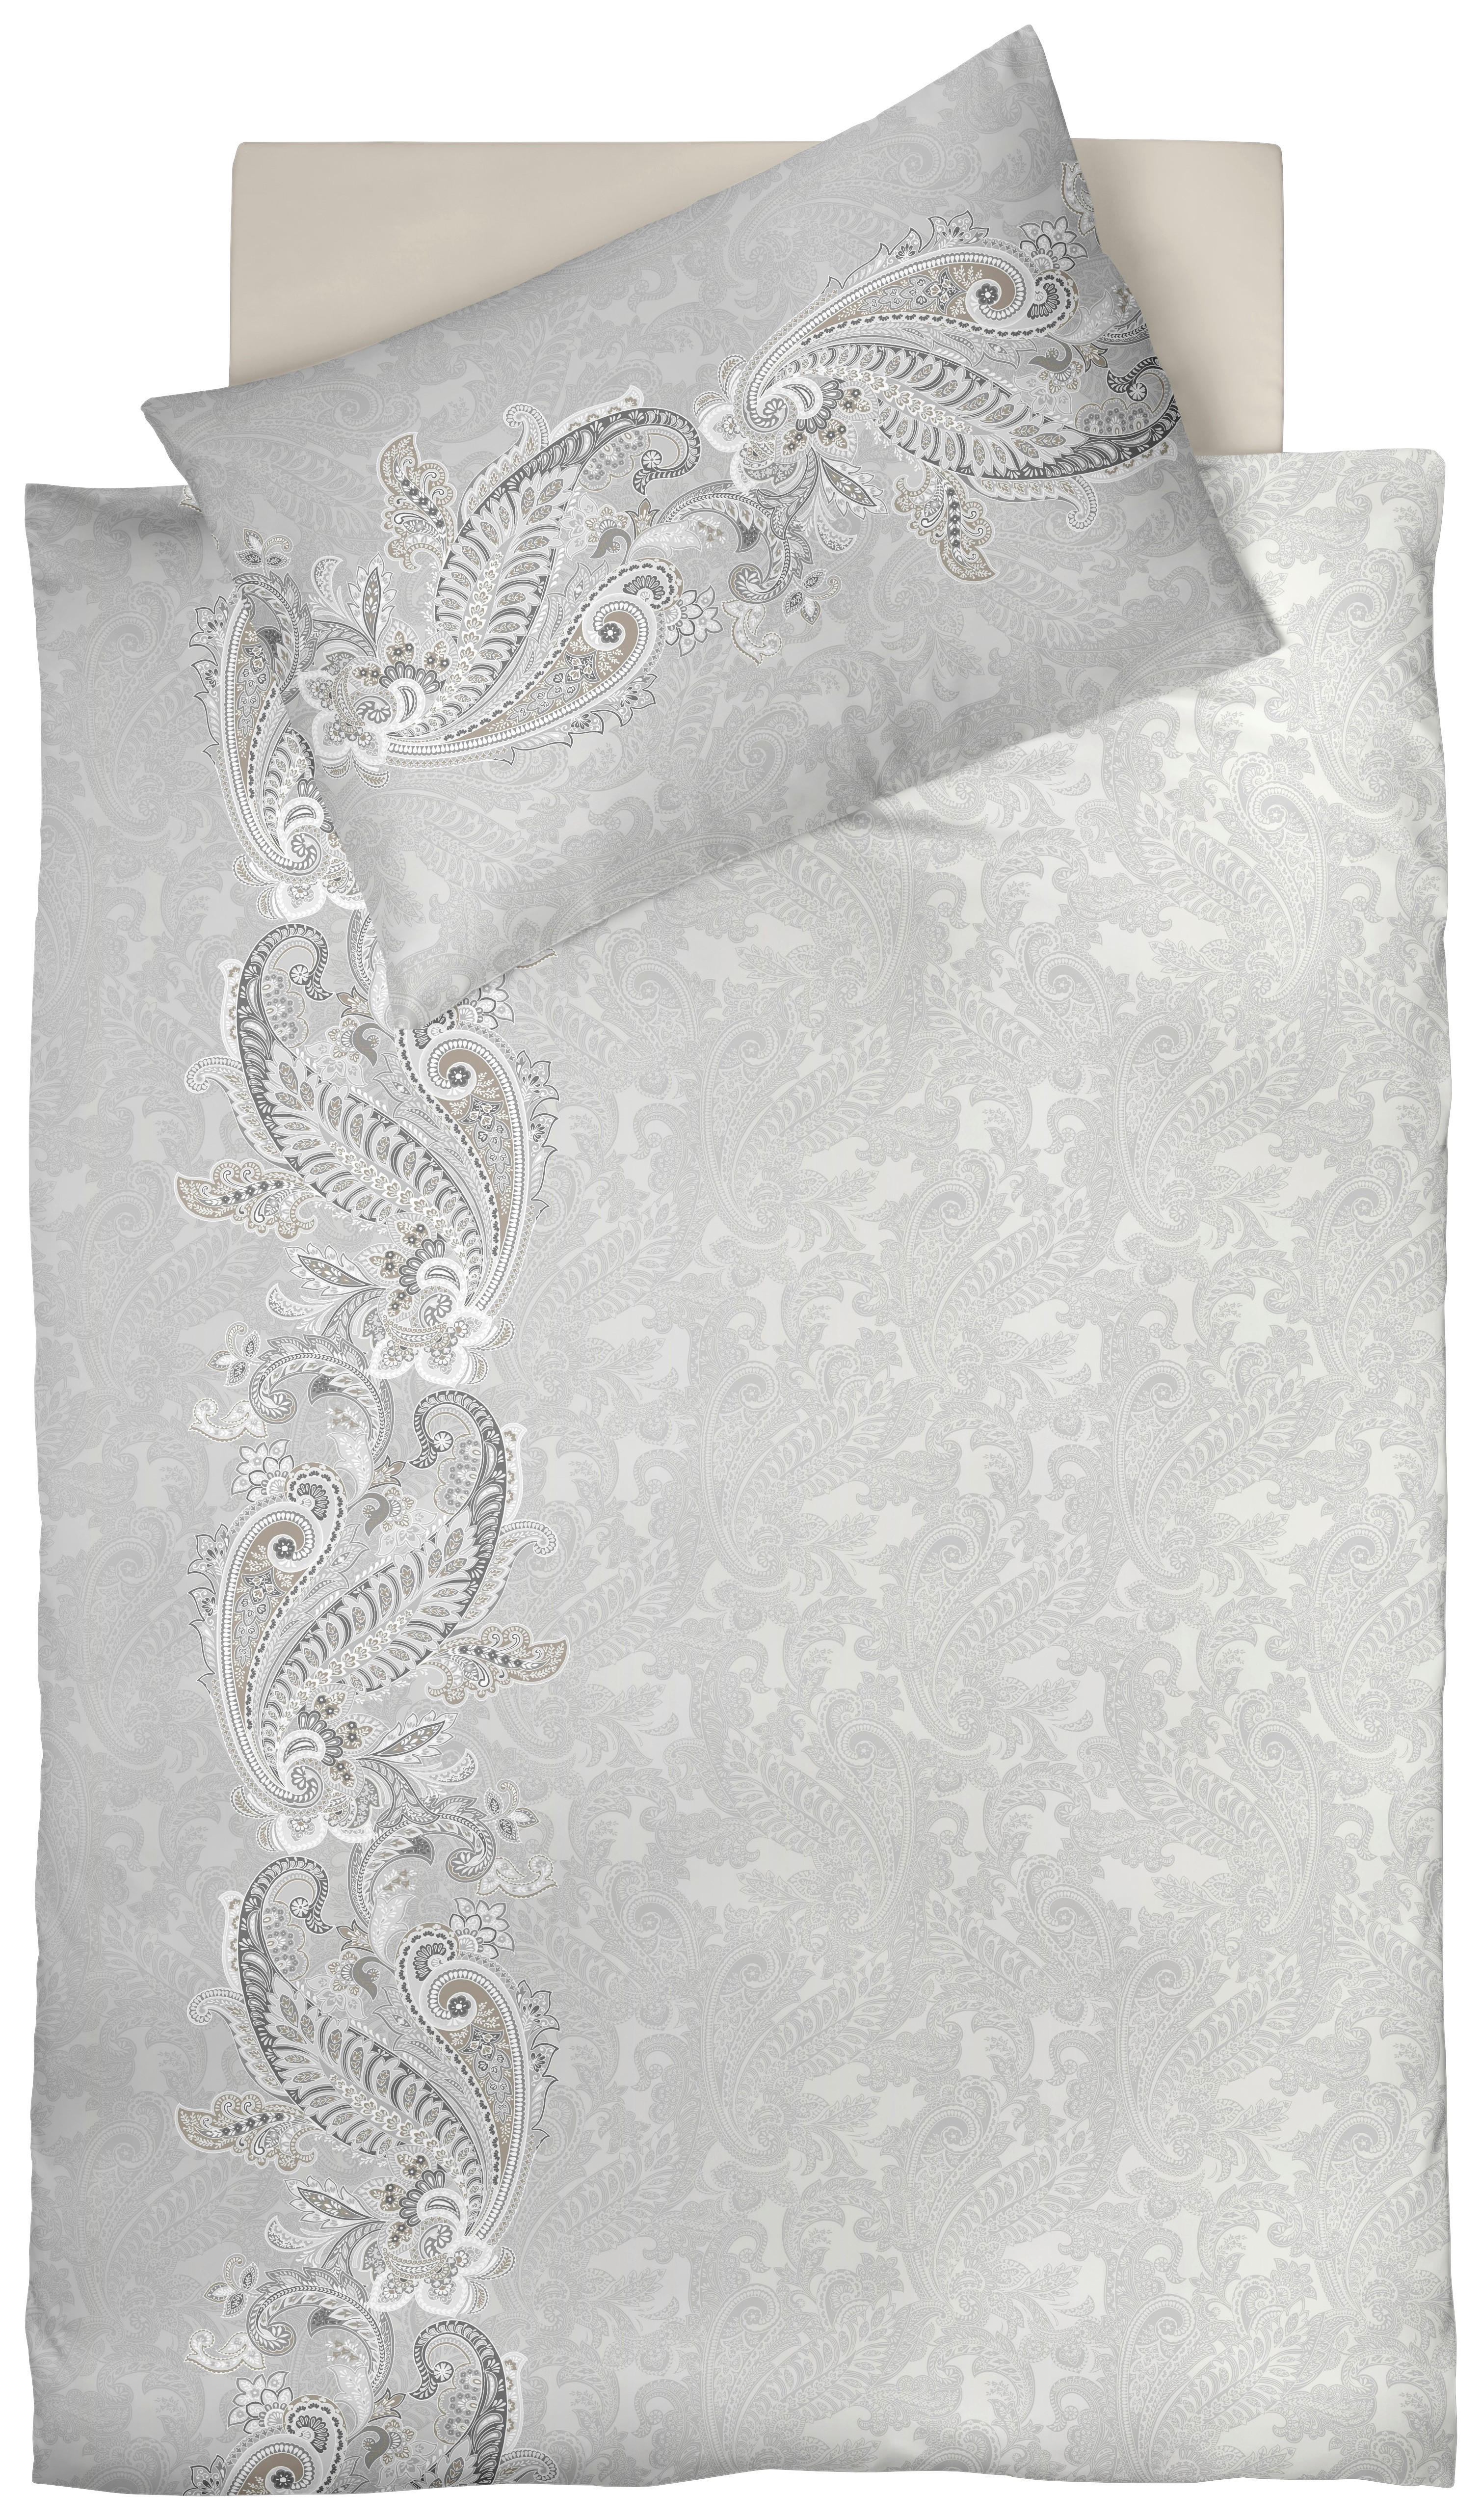 Fleuresse POSTEĽNÁ BIELIZEŇ, makosatén, sivá, biela, 140/200 cm - sivá, biela